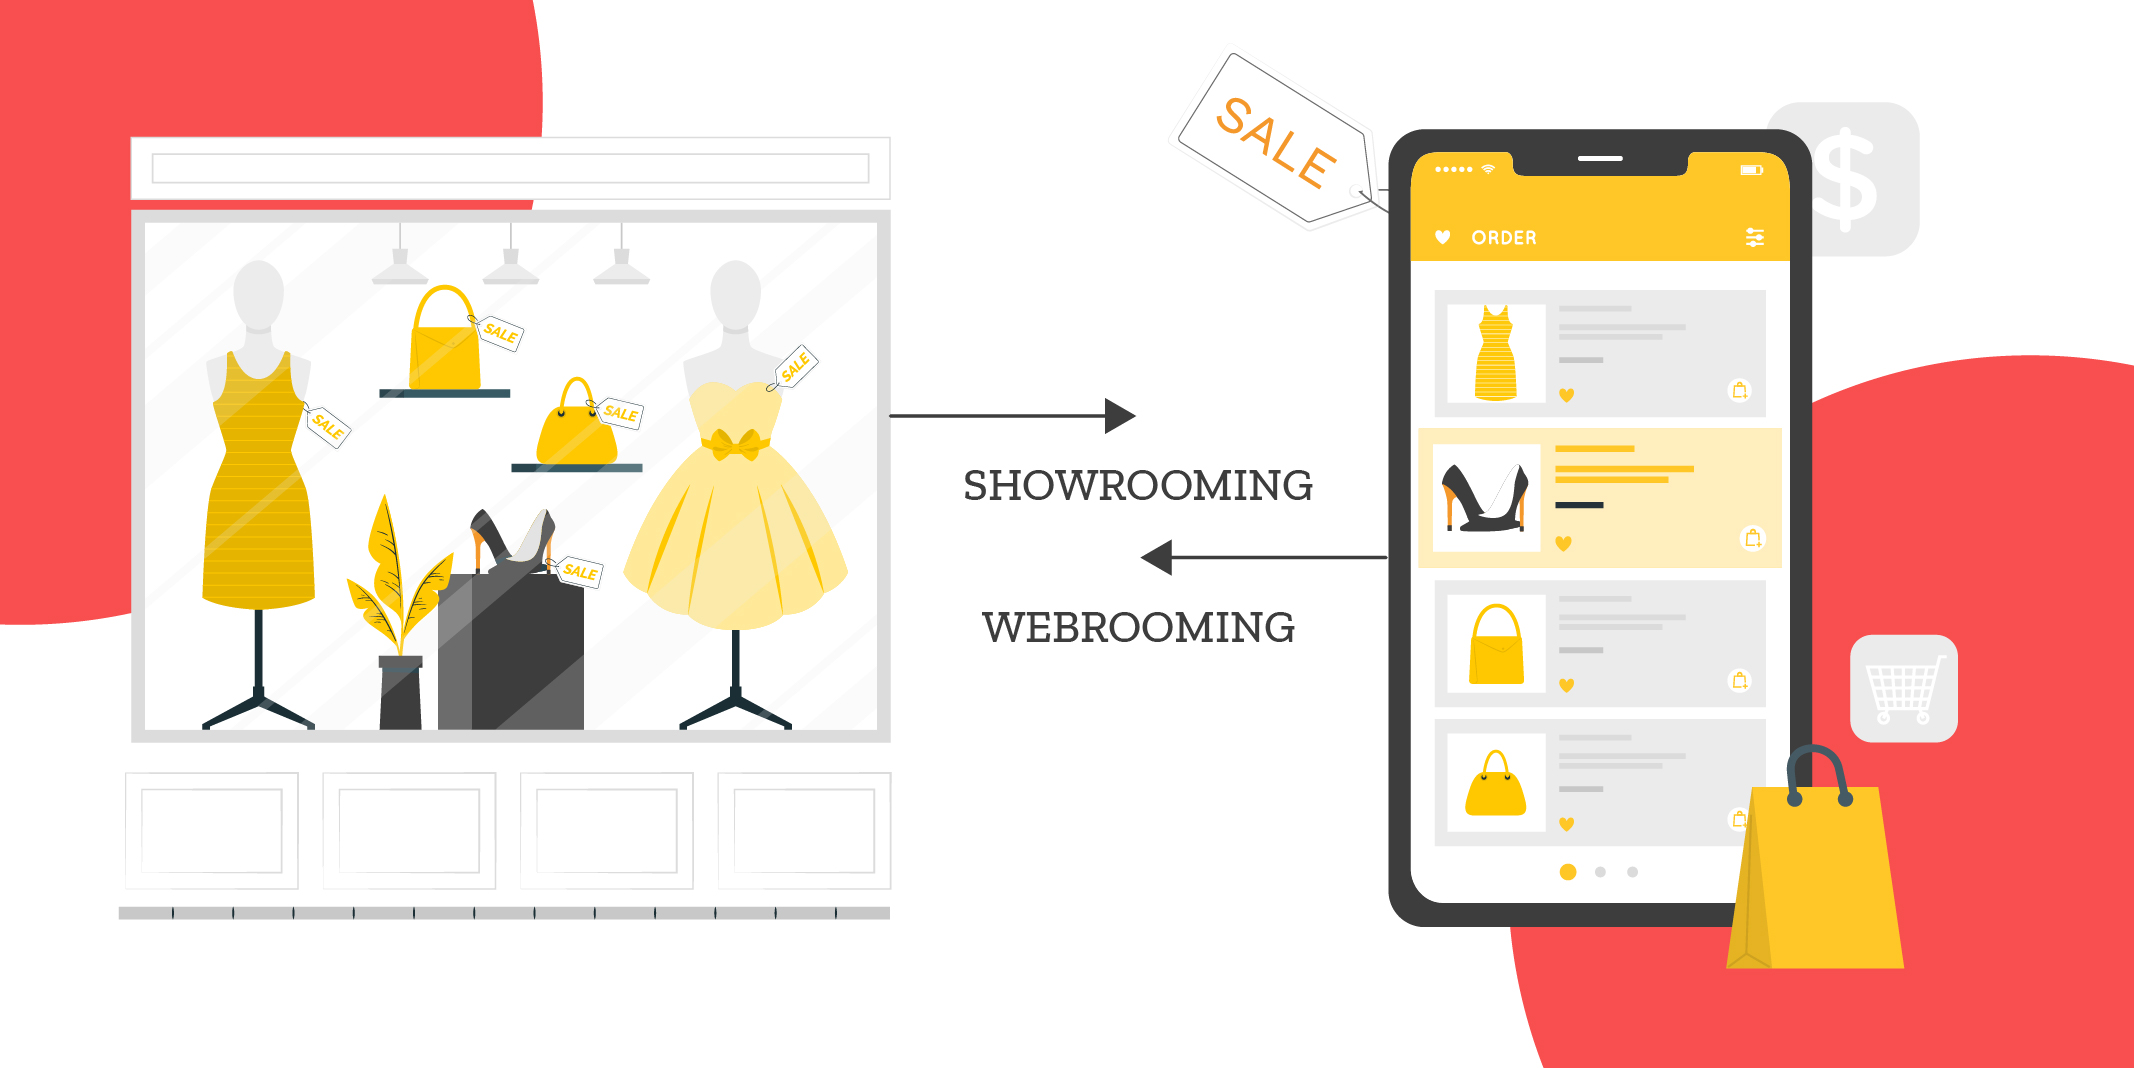 Webrooming and Showrooming